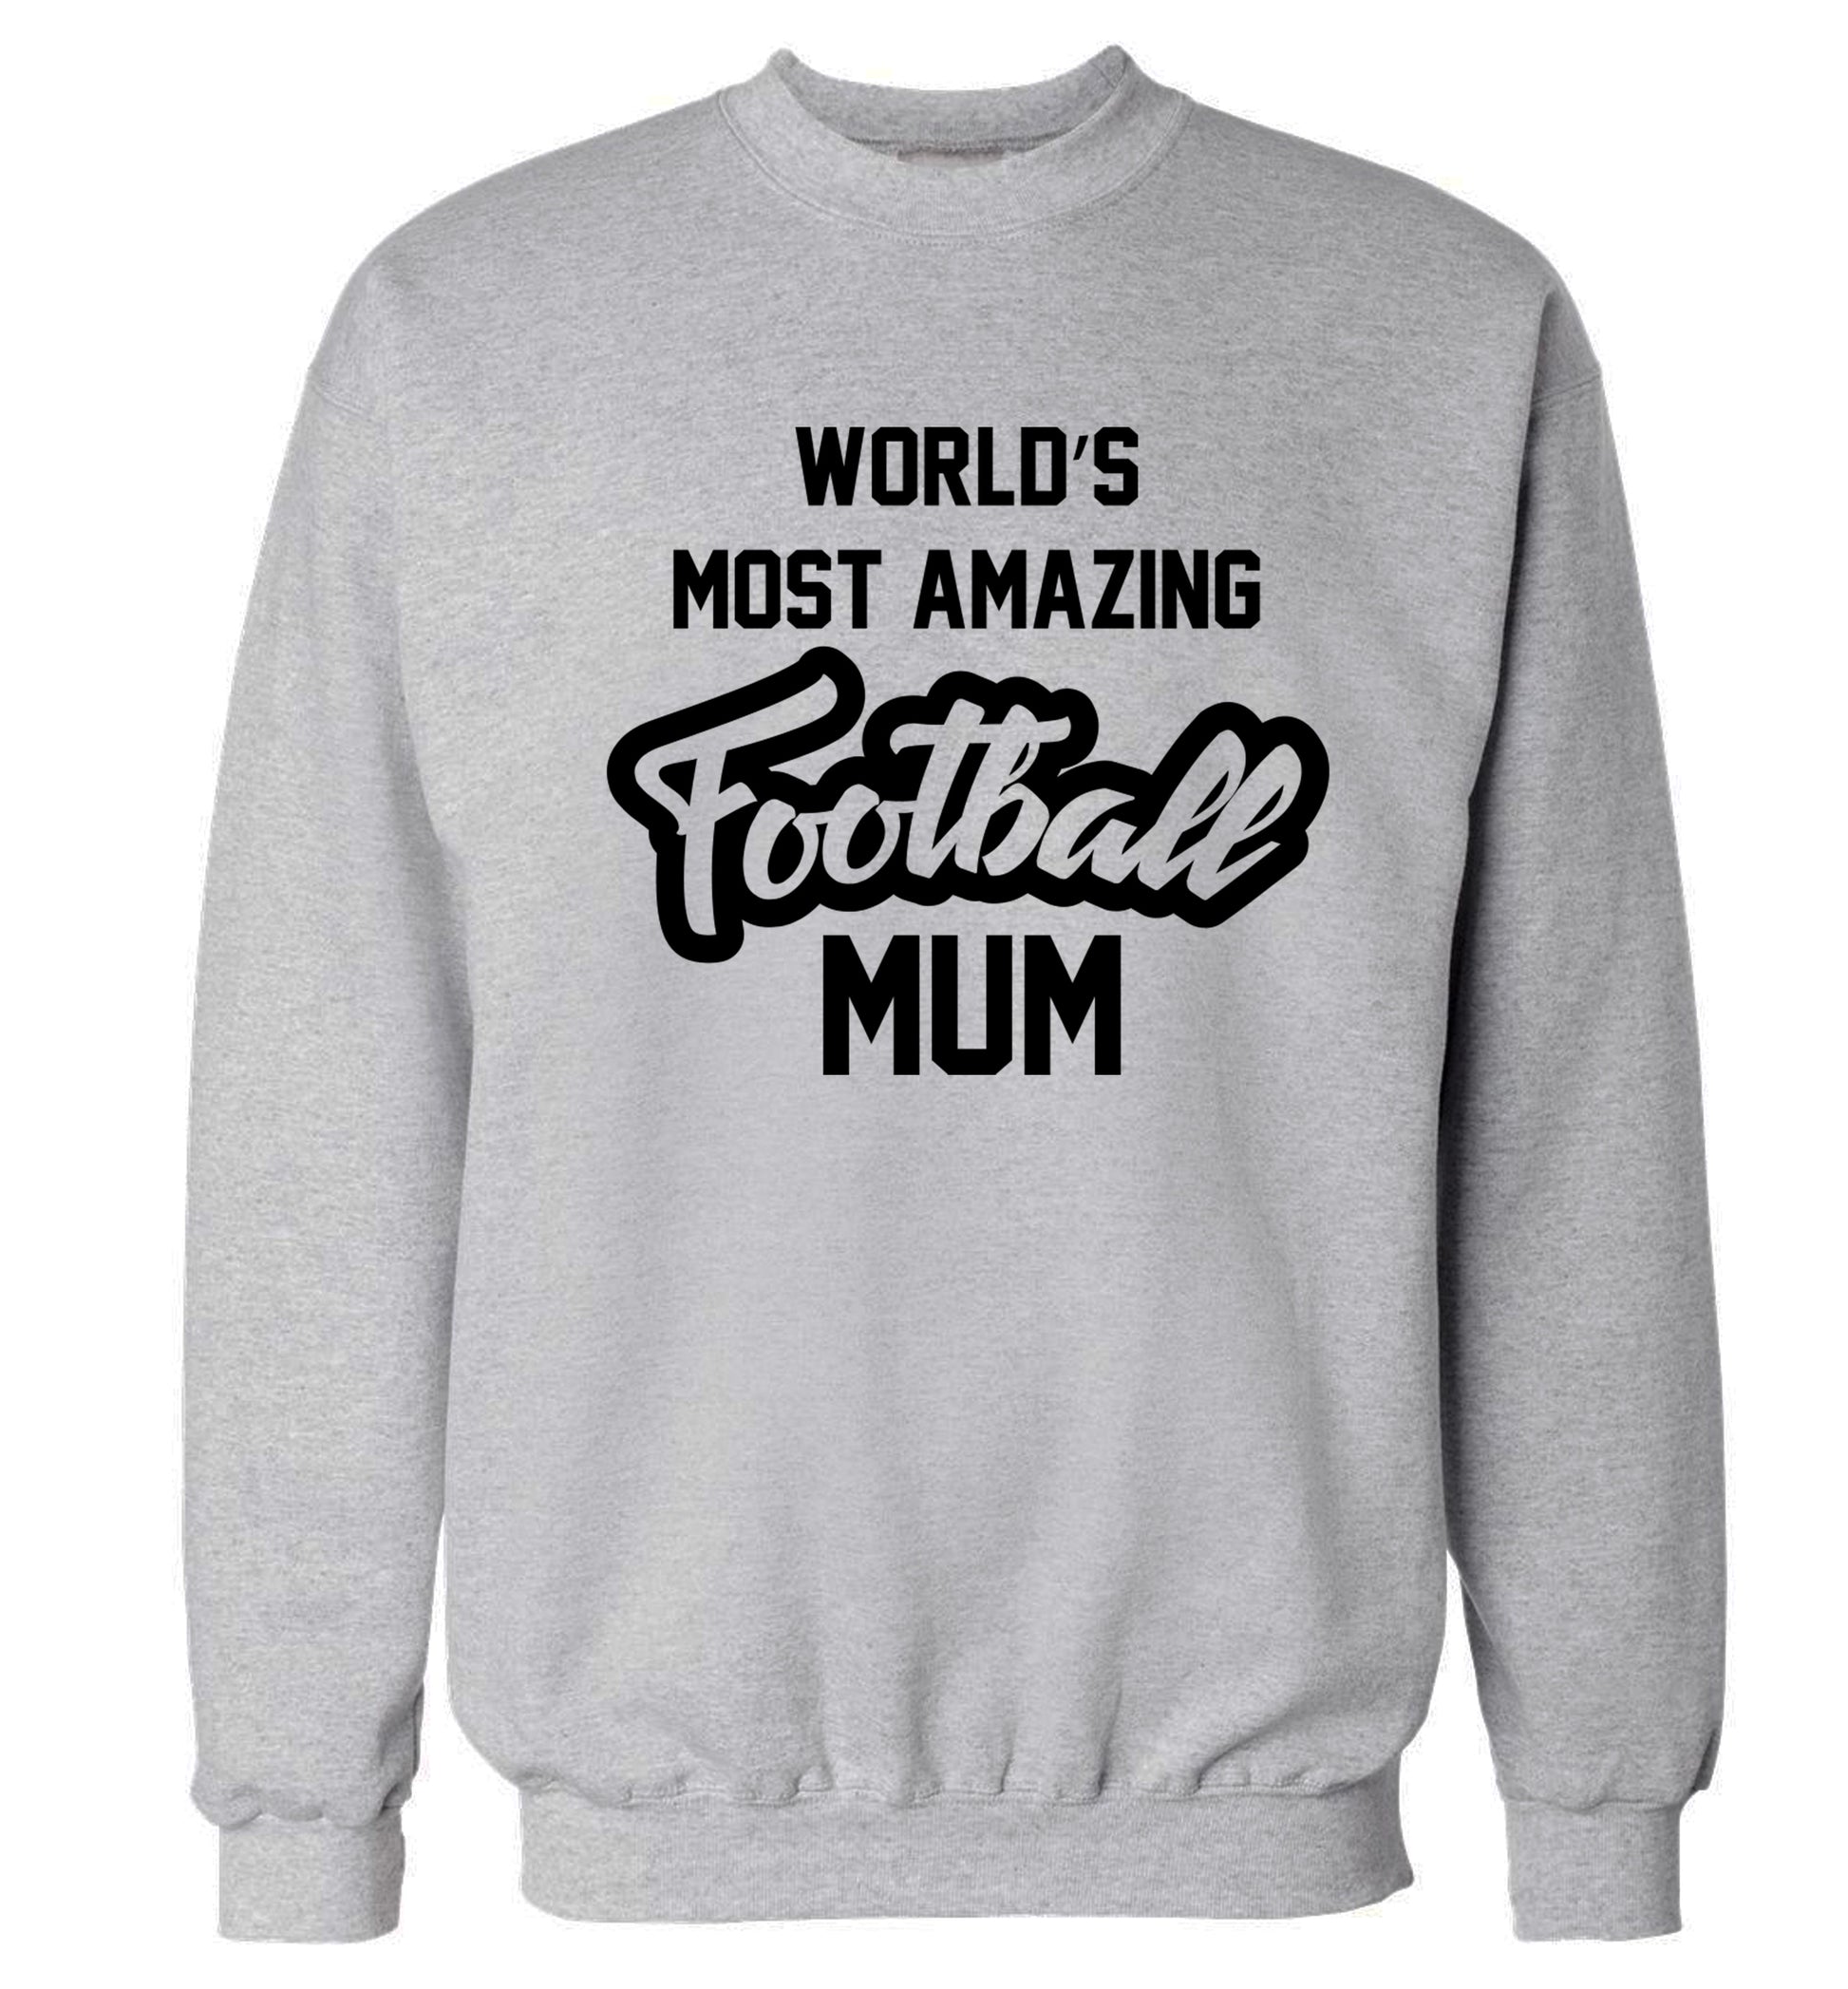 Worlds most amazing football mum Adult's unisexgrey Sweater 2XL